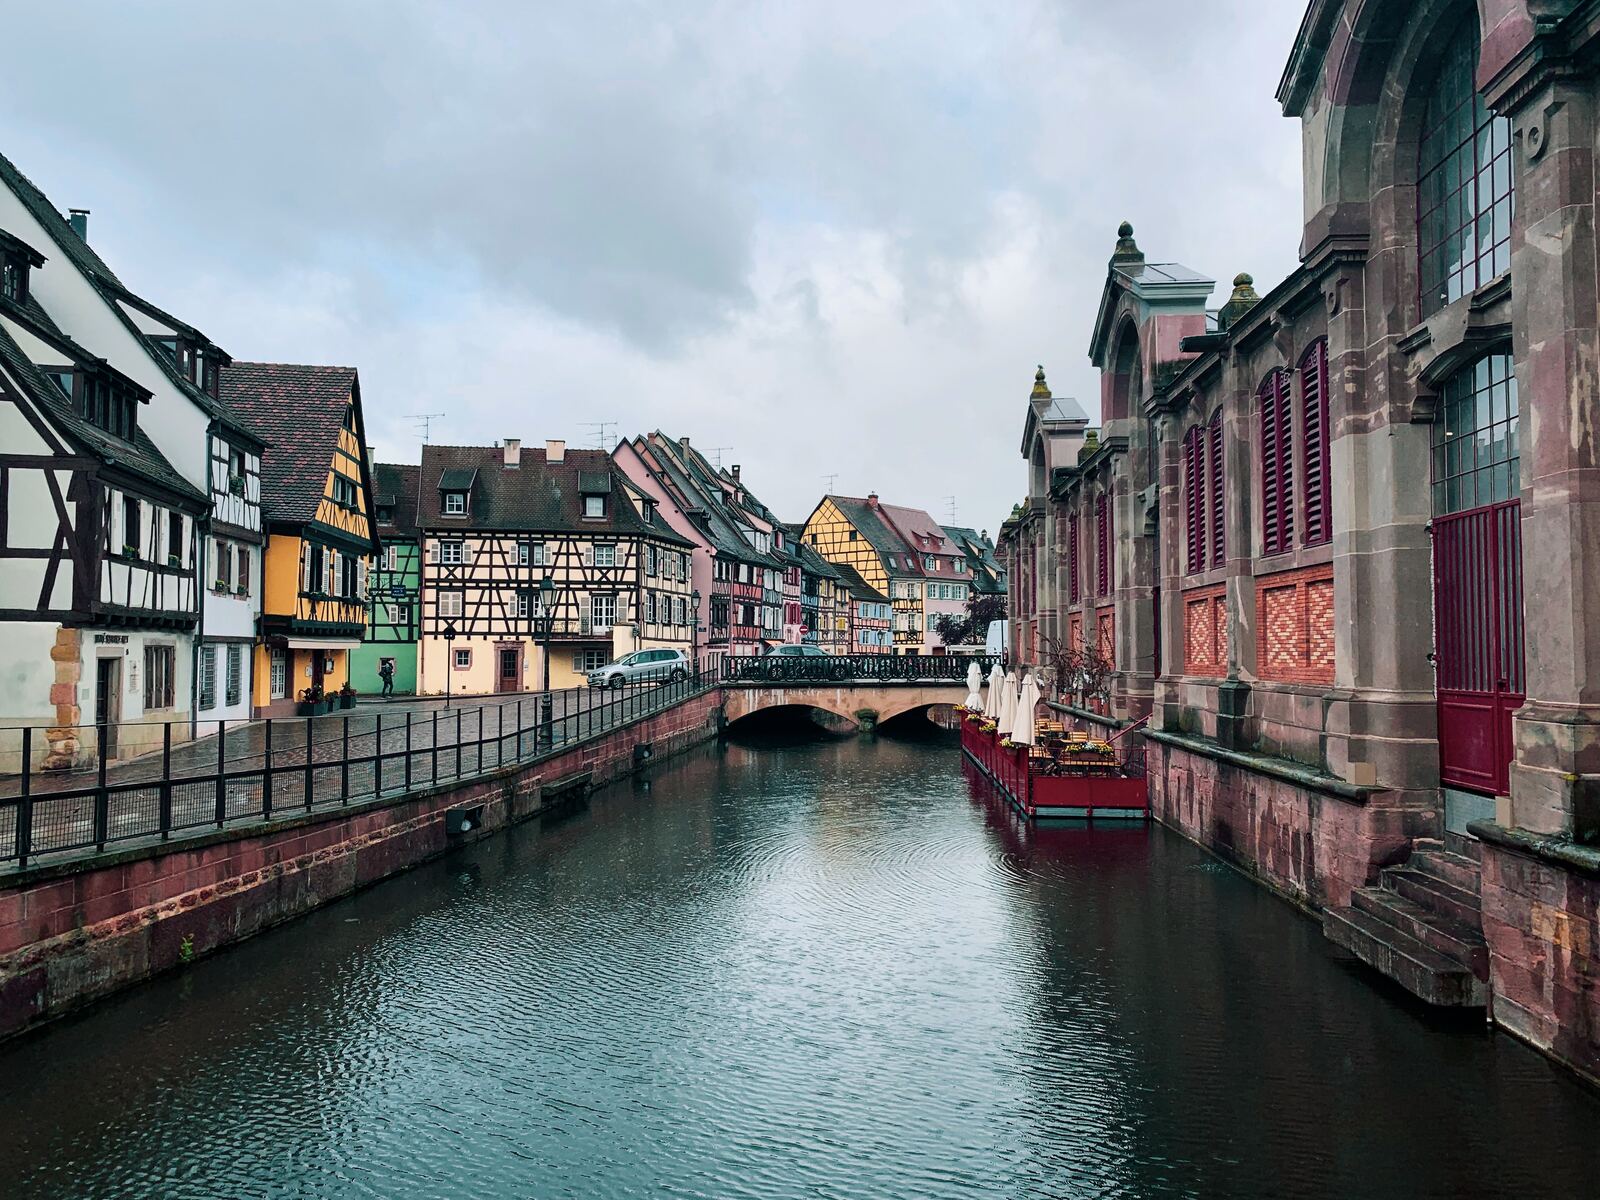 Image of Petite Venise, Colmar by Team PhotoHound